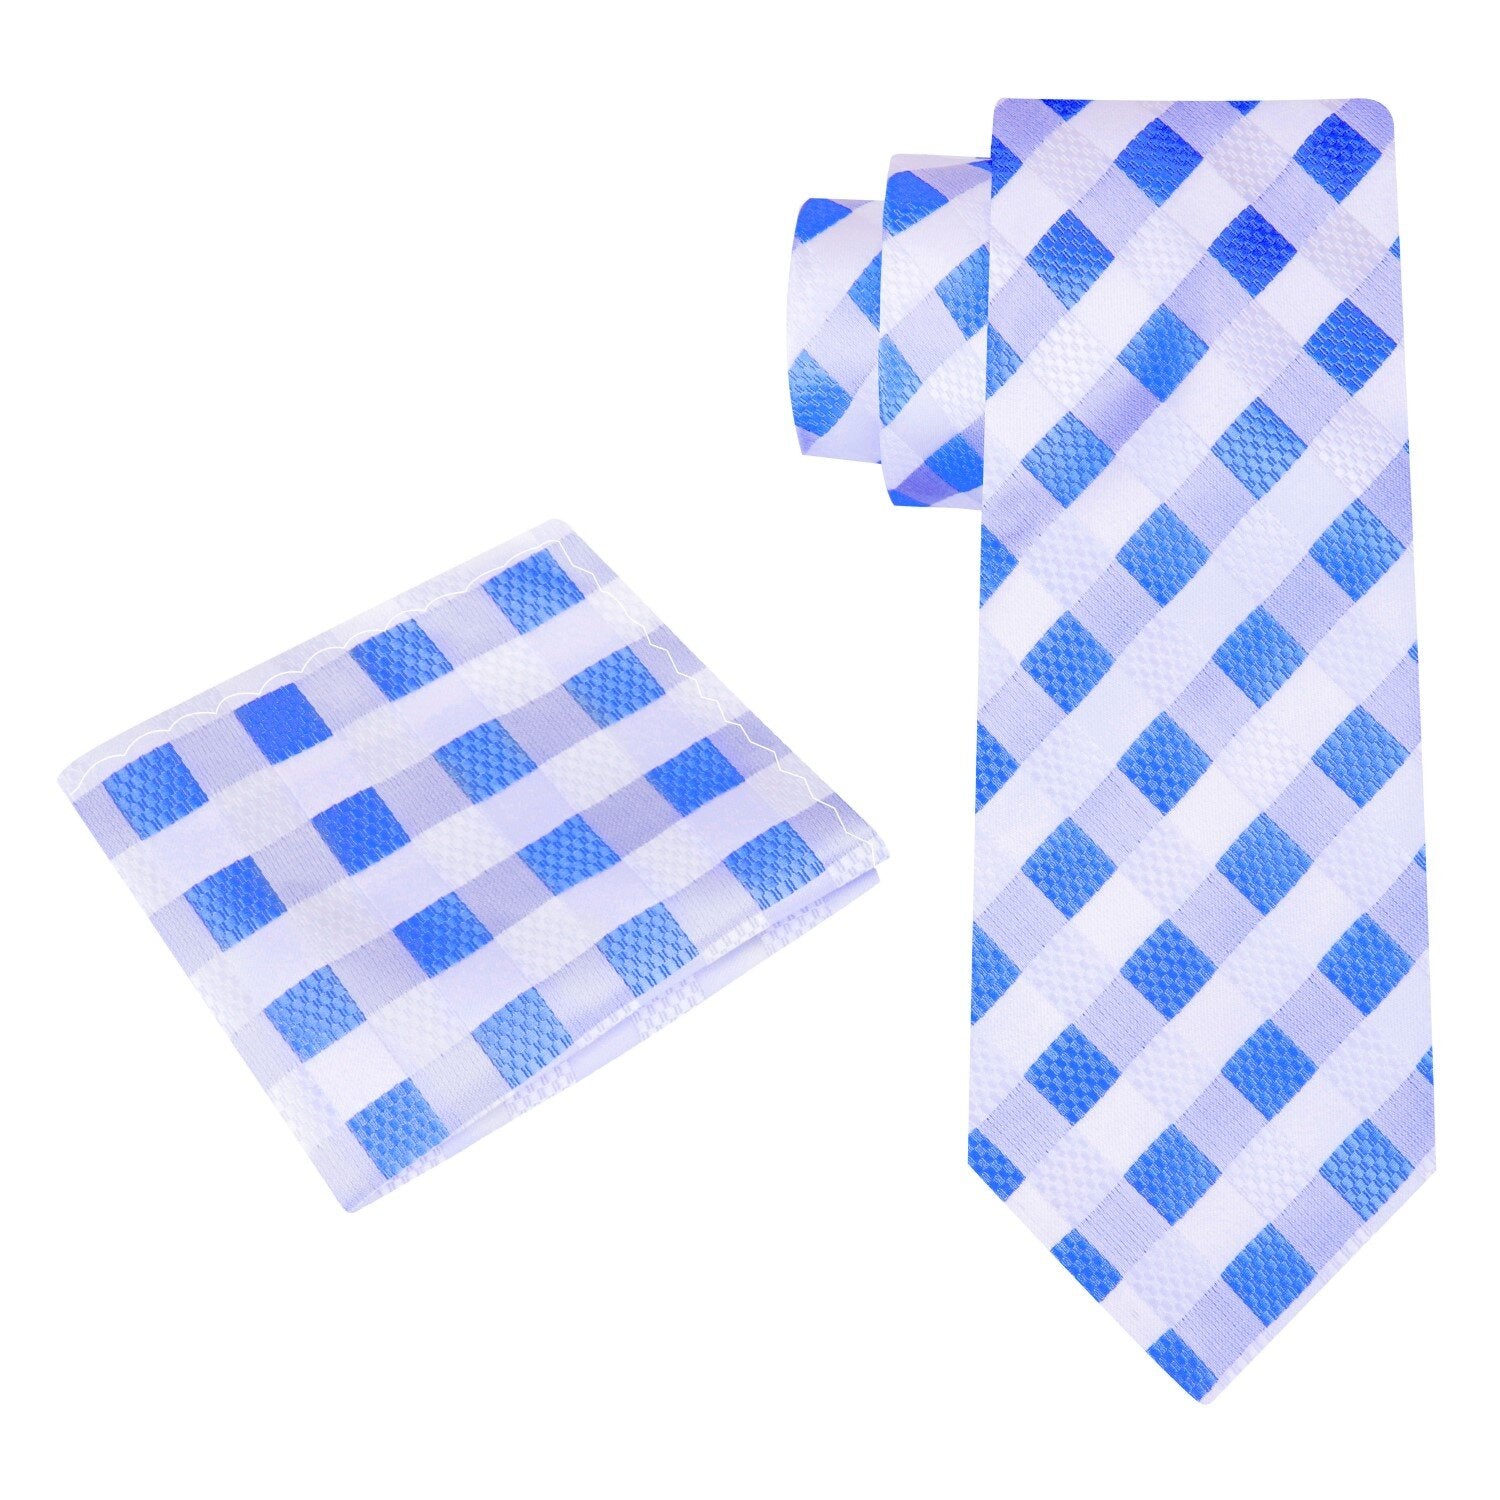 Alt View: Blue, White Check Tie and Square